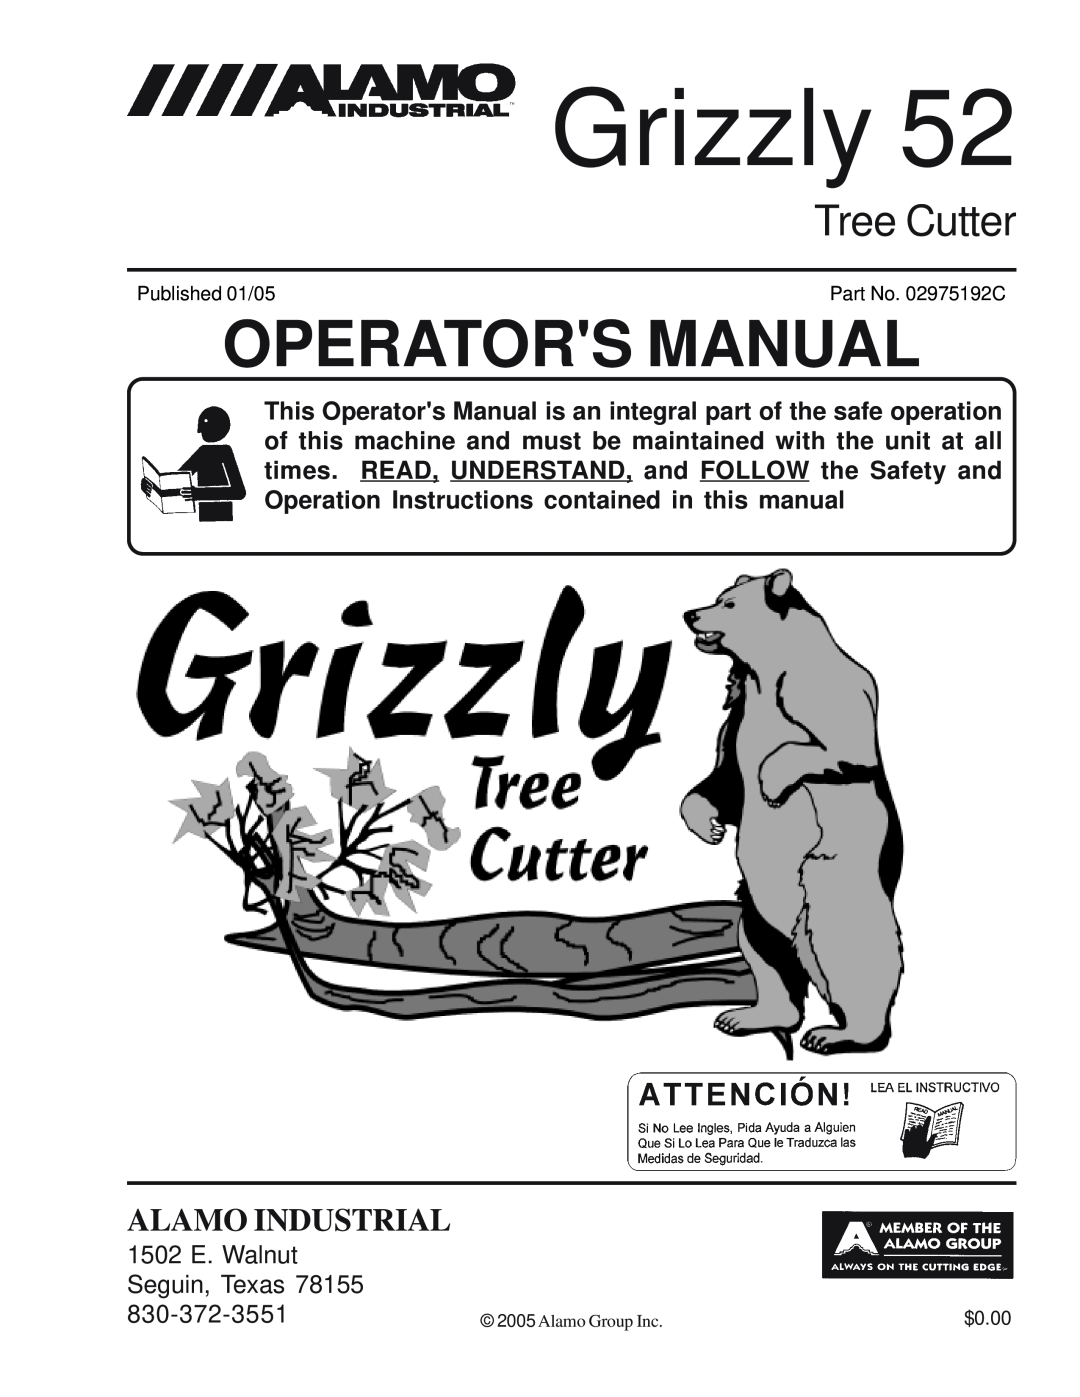 Grizzly 52 manual Grizzly, Operators Manual, Tree Cutter, Alamo Industrial, 1502 E. Walnut Seguin, Texas, Alamo Group Inc 